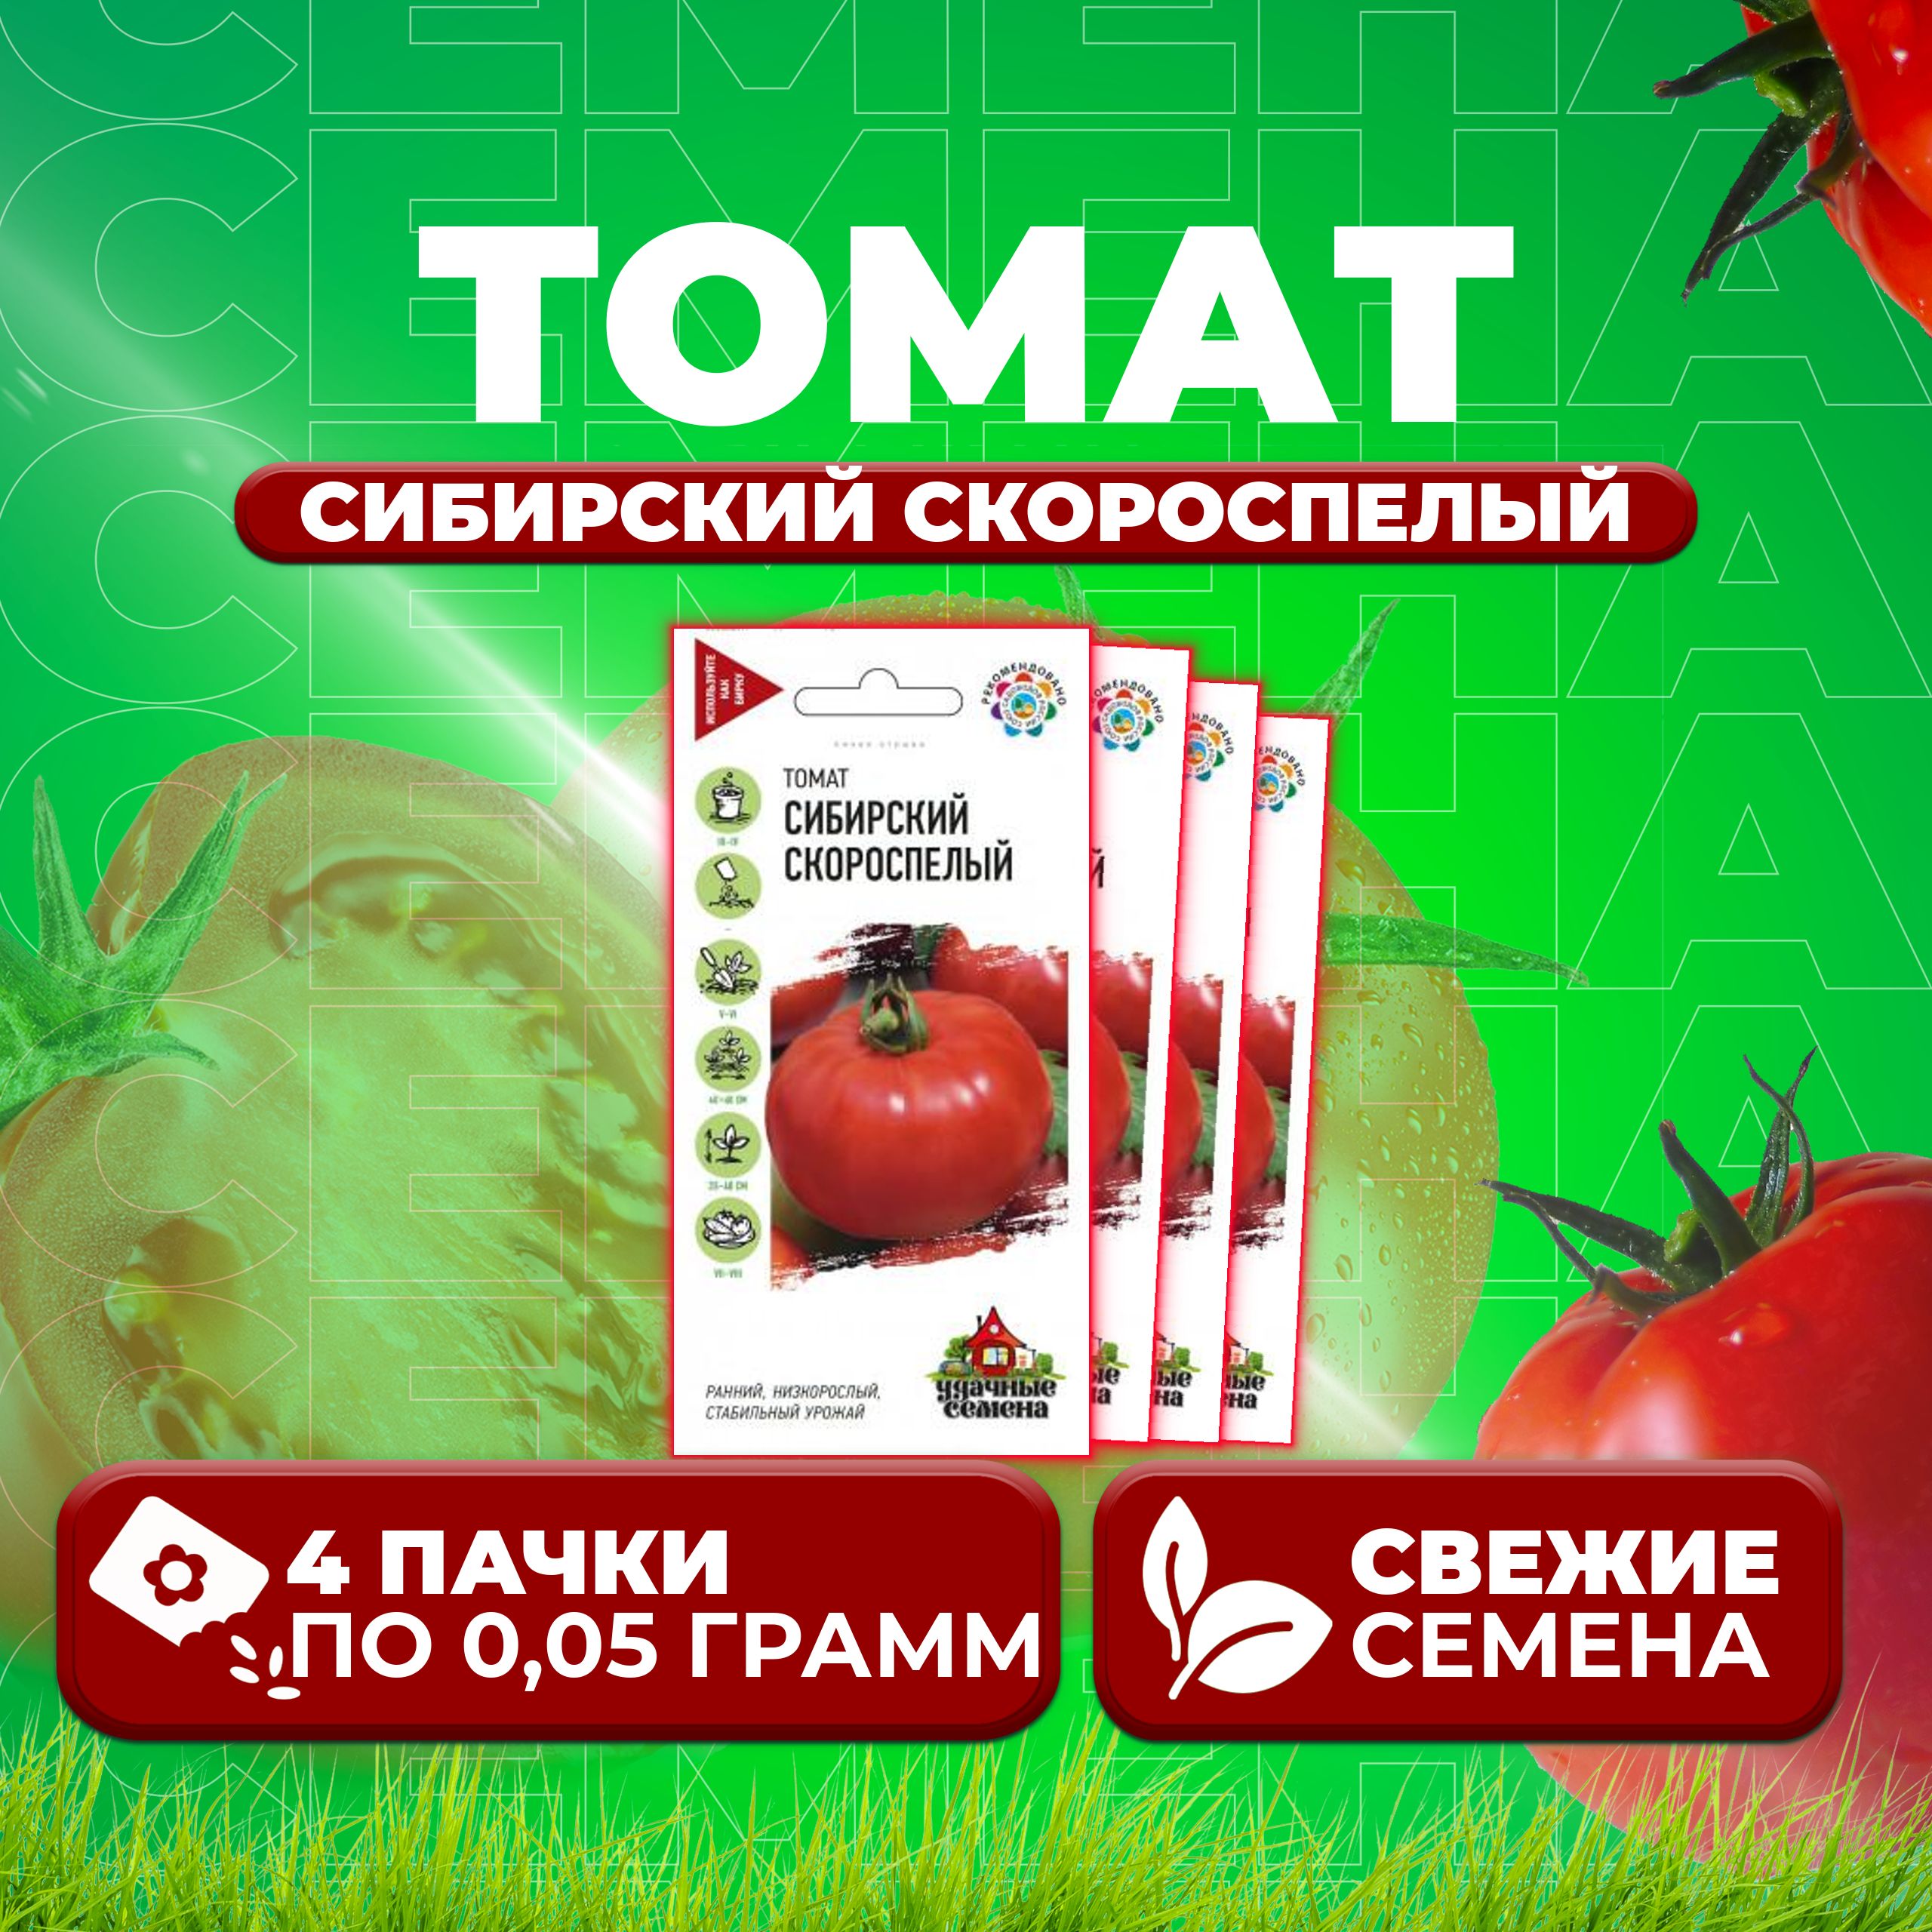 Семена томат Сибирский скороспелый Удачные семена 1071858411-4 4 уп.